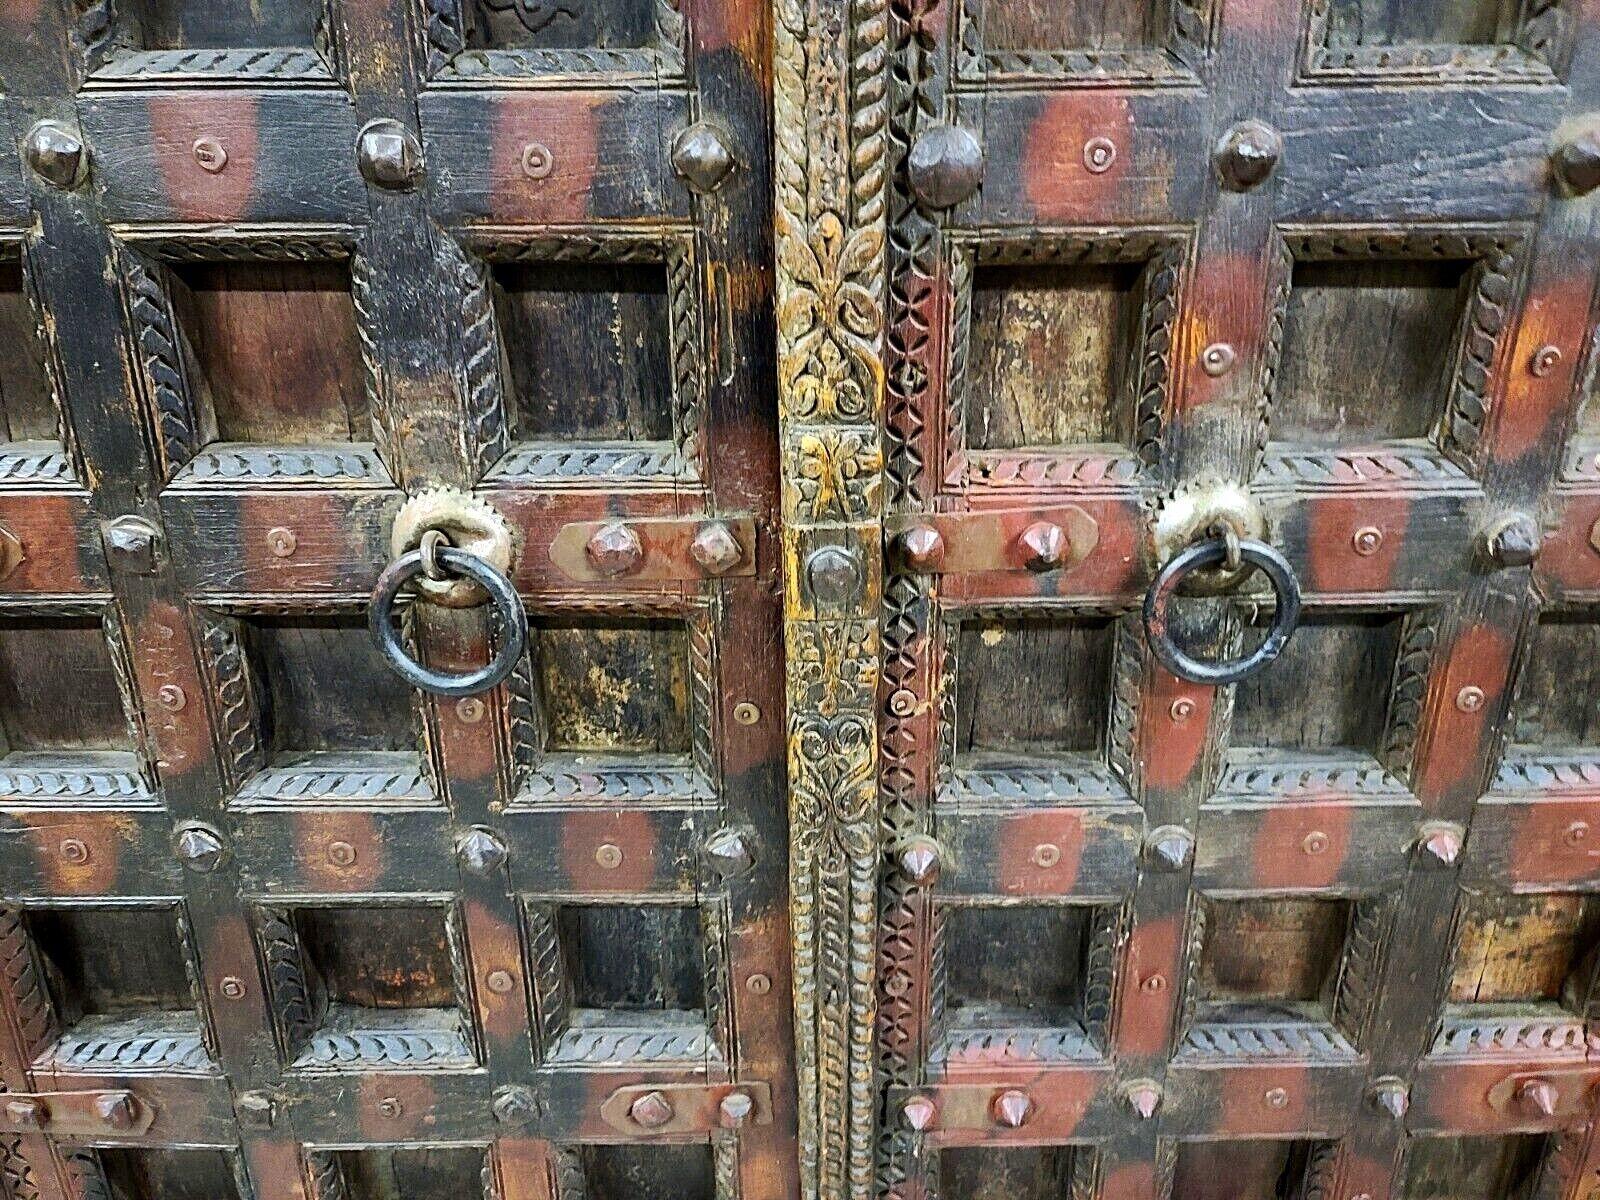 1800 antique armoire